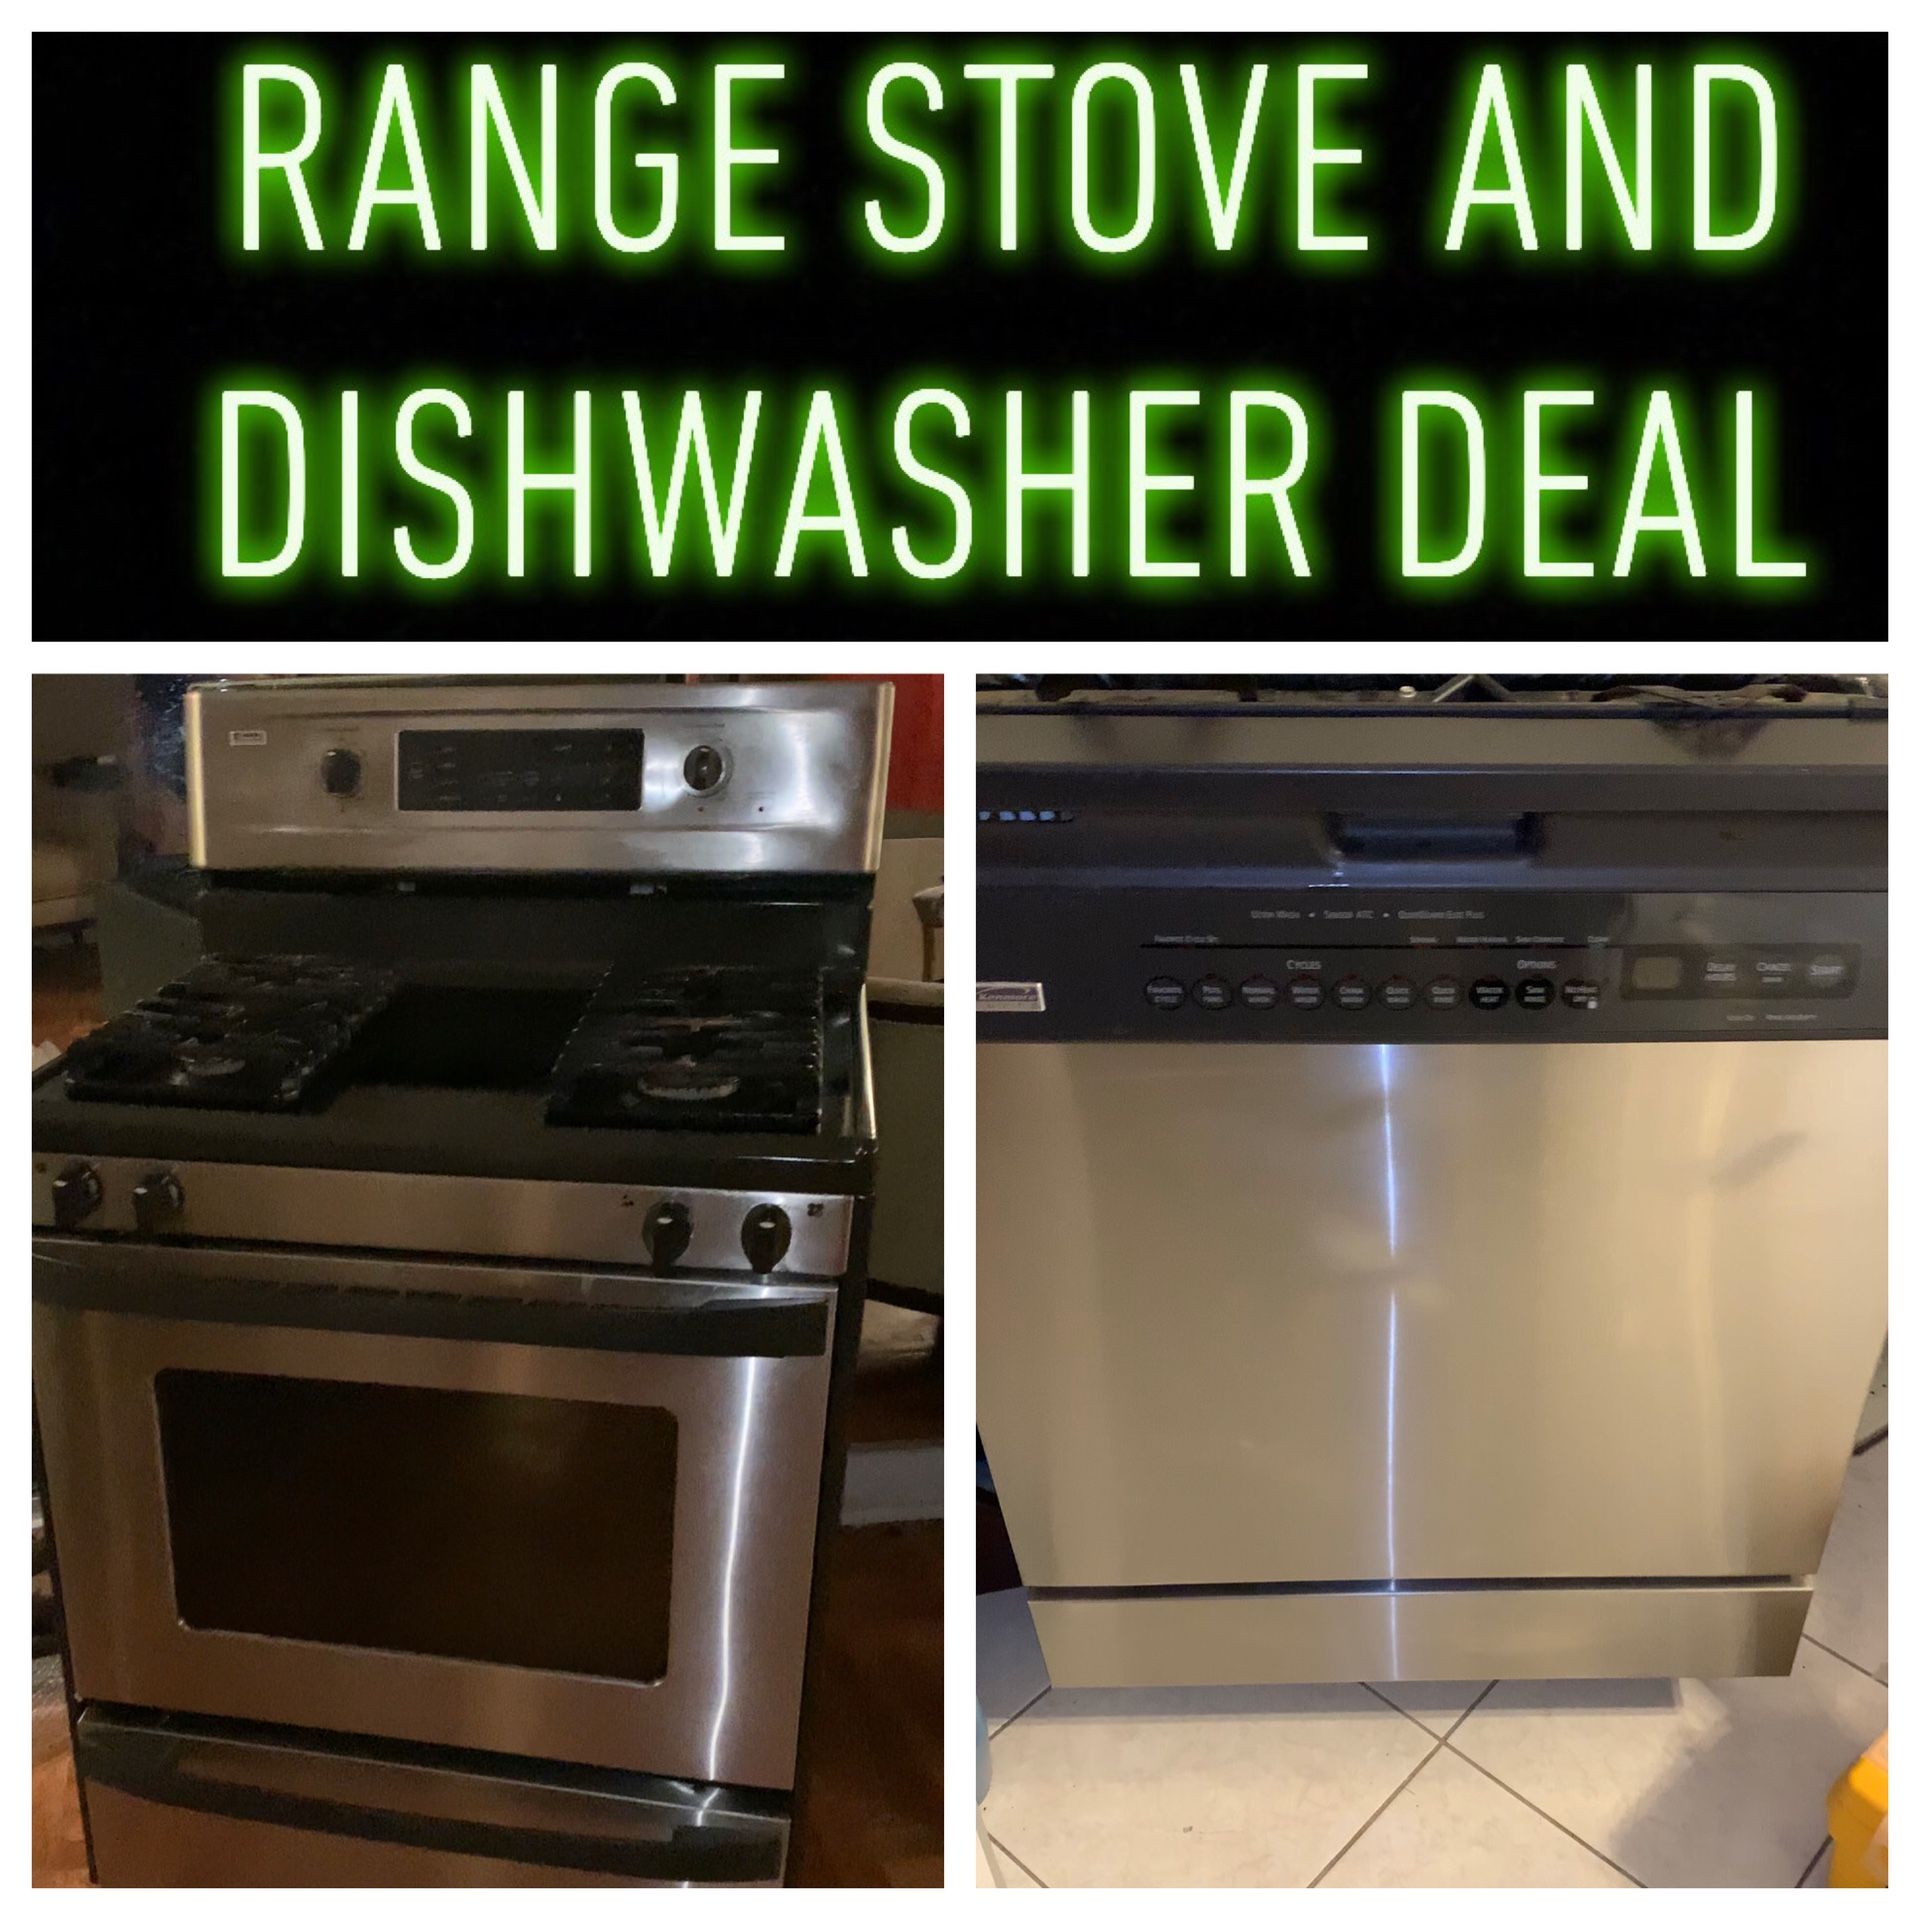 Range Stove and Dishwasher Deal